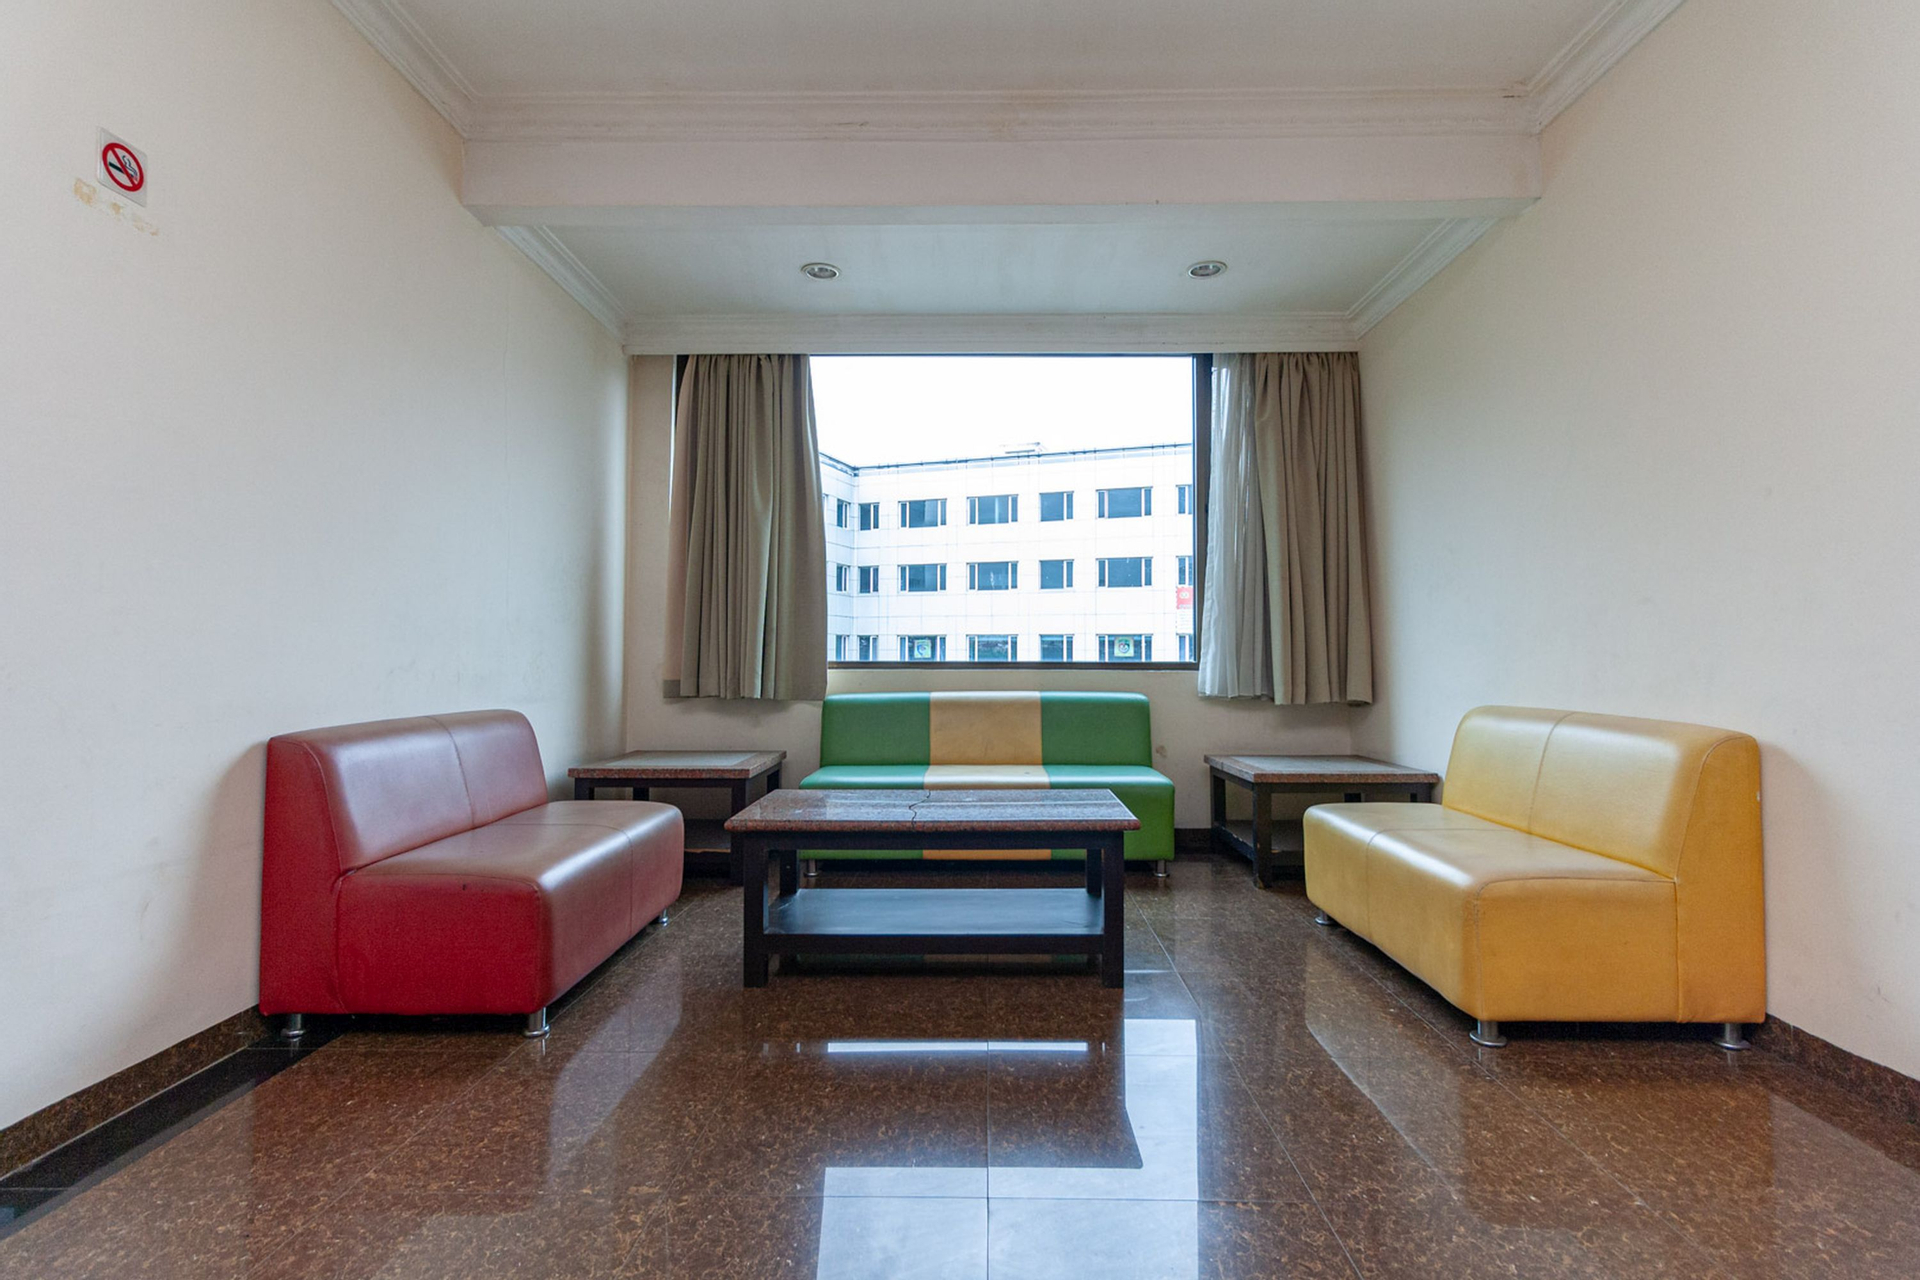 RedDoorz Premium @ Hotel Ratu Residence, Jambi